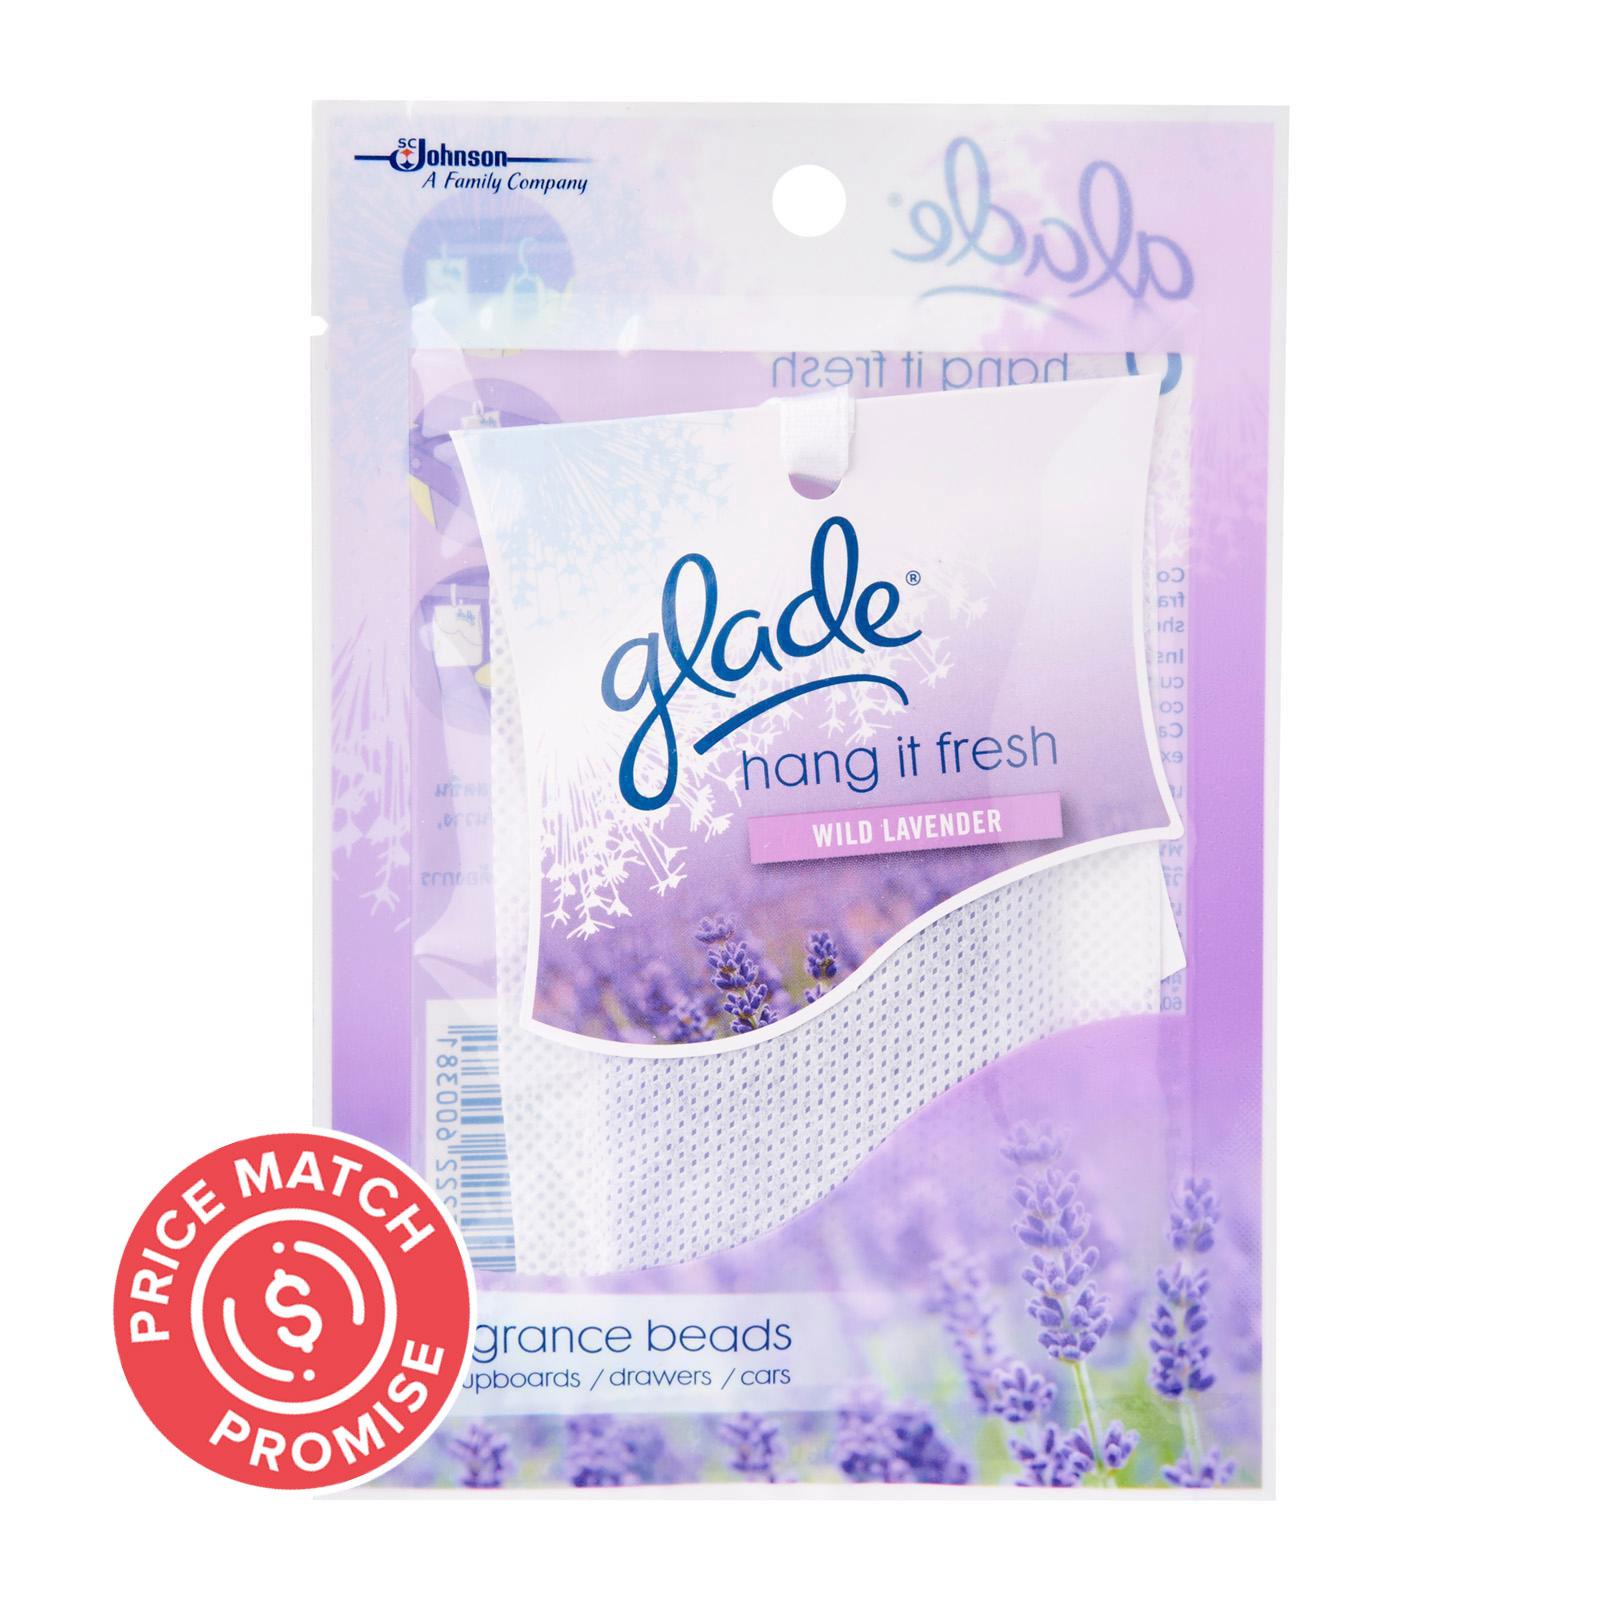 GLADE Hang It Fresh Fragrance Beads Lavender 8g ...